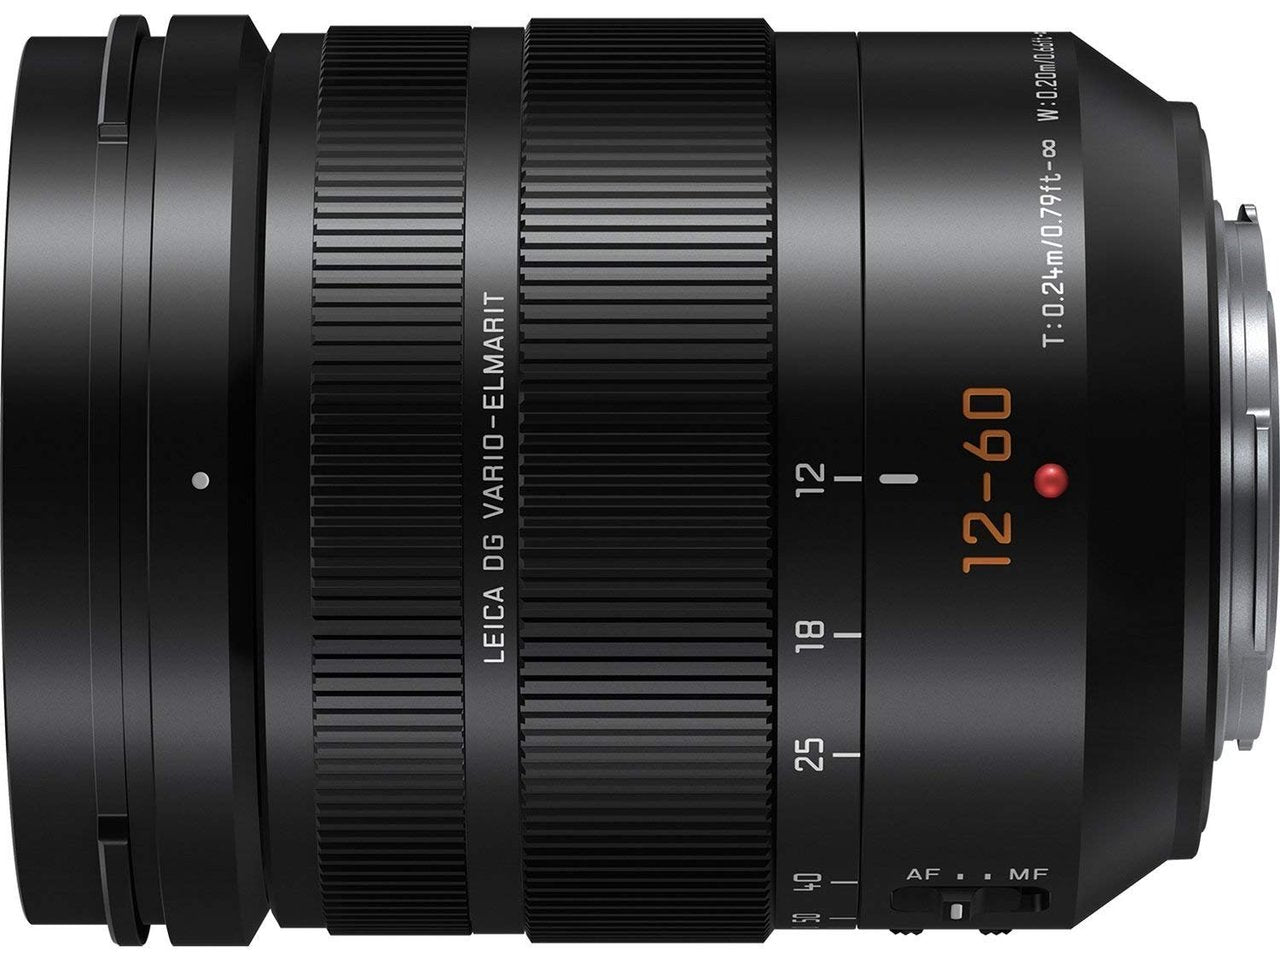 PANASONIC LUMIX G Leica DG Vario-ELMARIT Professional Lens, 12-60MM, F2.8-4.0 ASPH, MIRRORLESS Micro Four Thirds, Power O.I.S, H-ES12060 (USA Black)